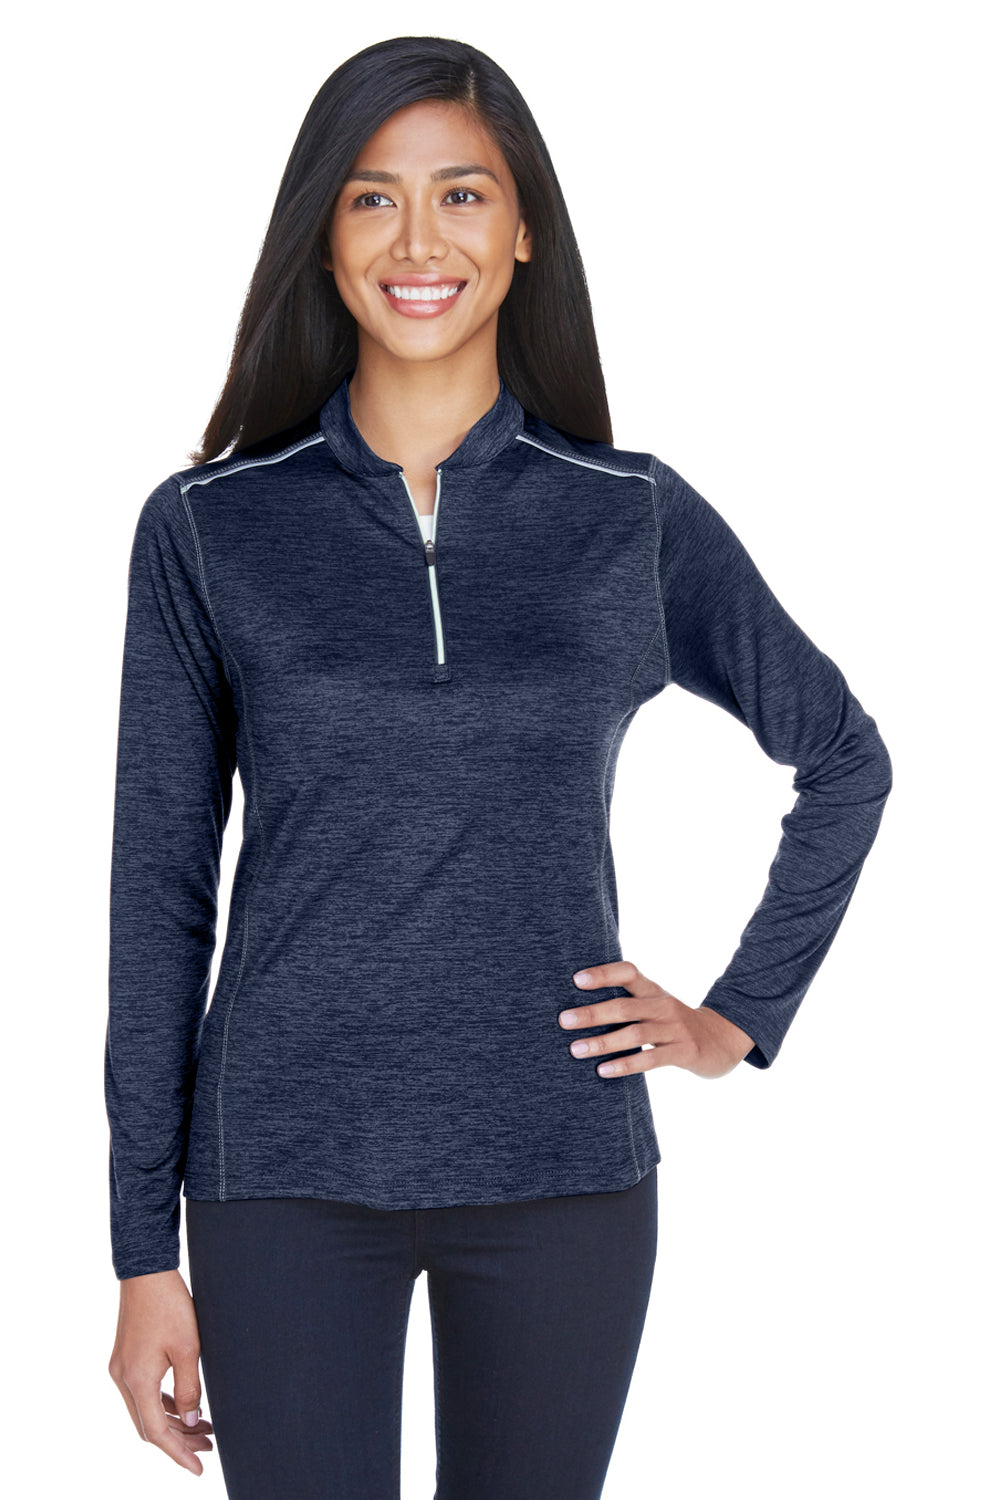 Core 365 CE401W Womens Kinetic Performance Moisture Wicking 1/4 Zip Sweatshirt Navy Blue/Carbon Grey Front